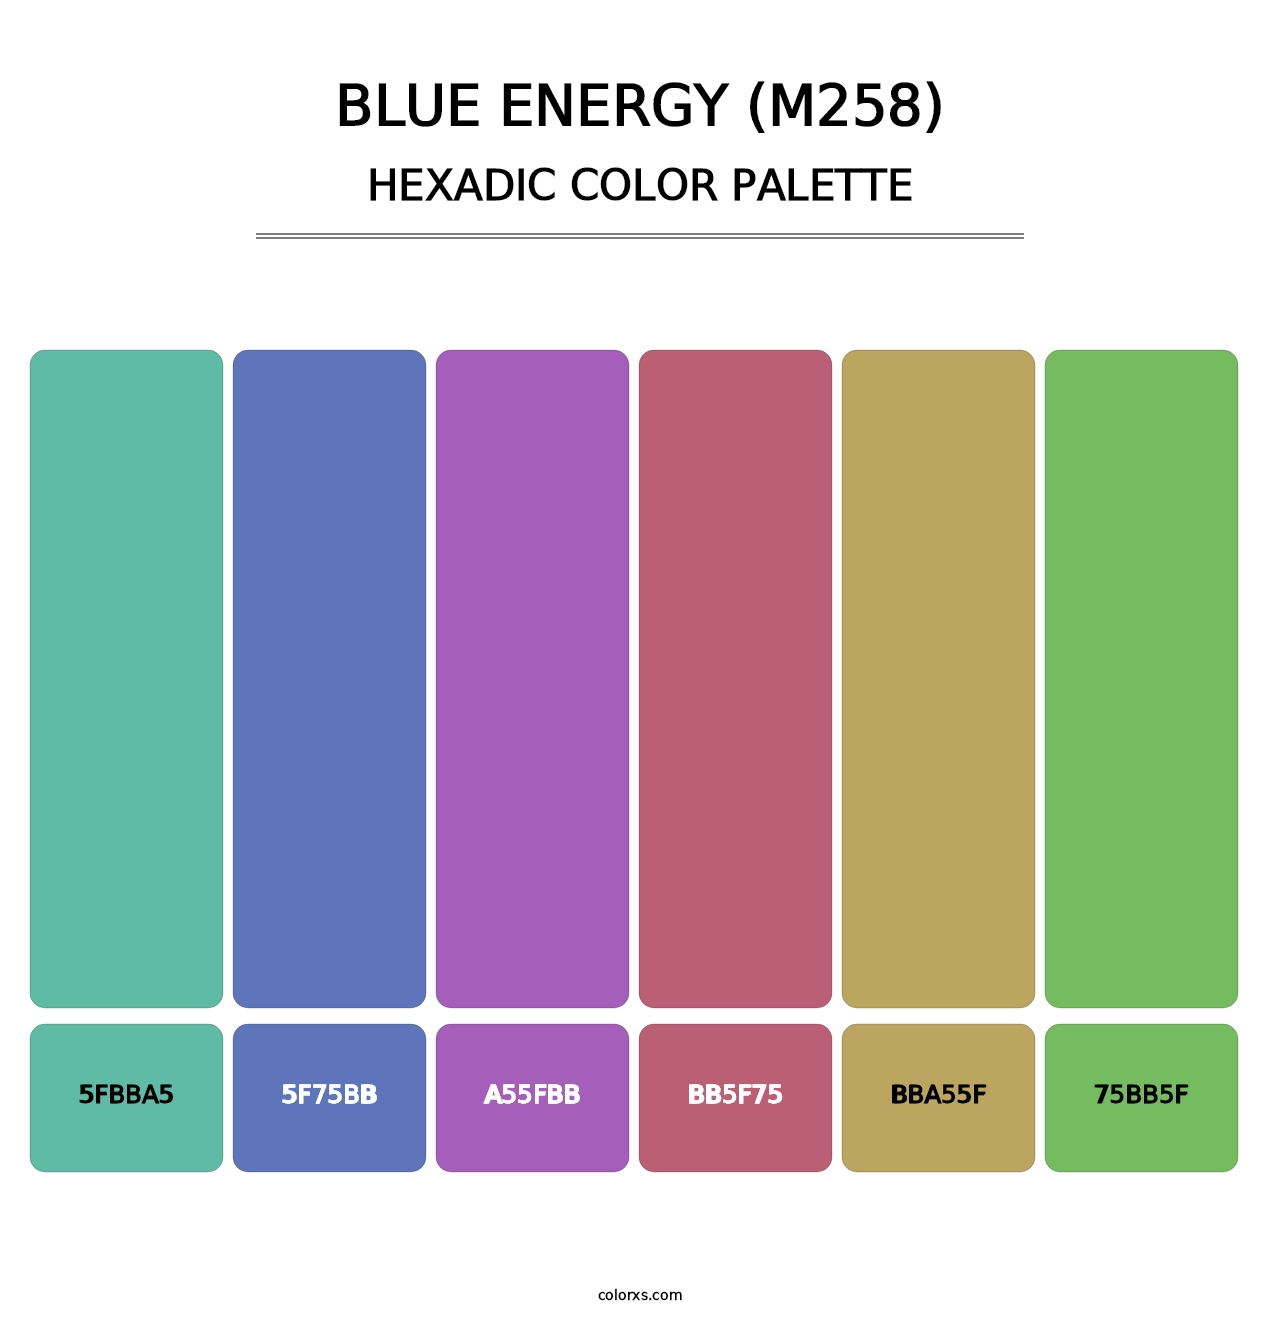 Blue Energy (M258) - Hexadic Color Palette